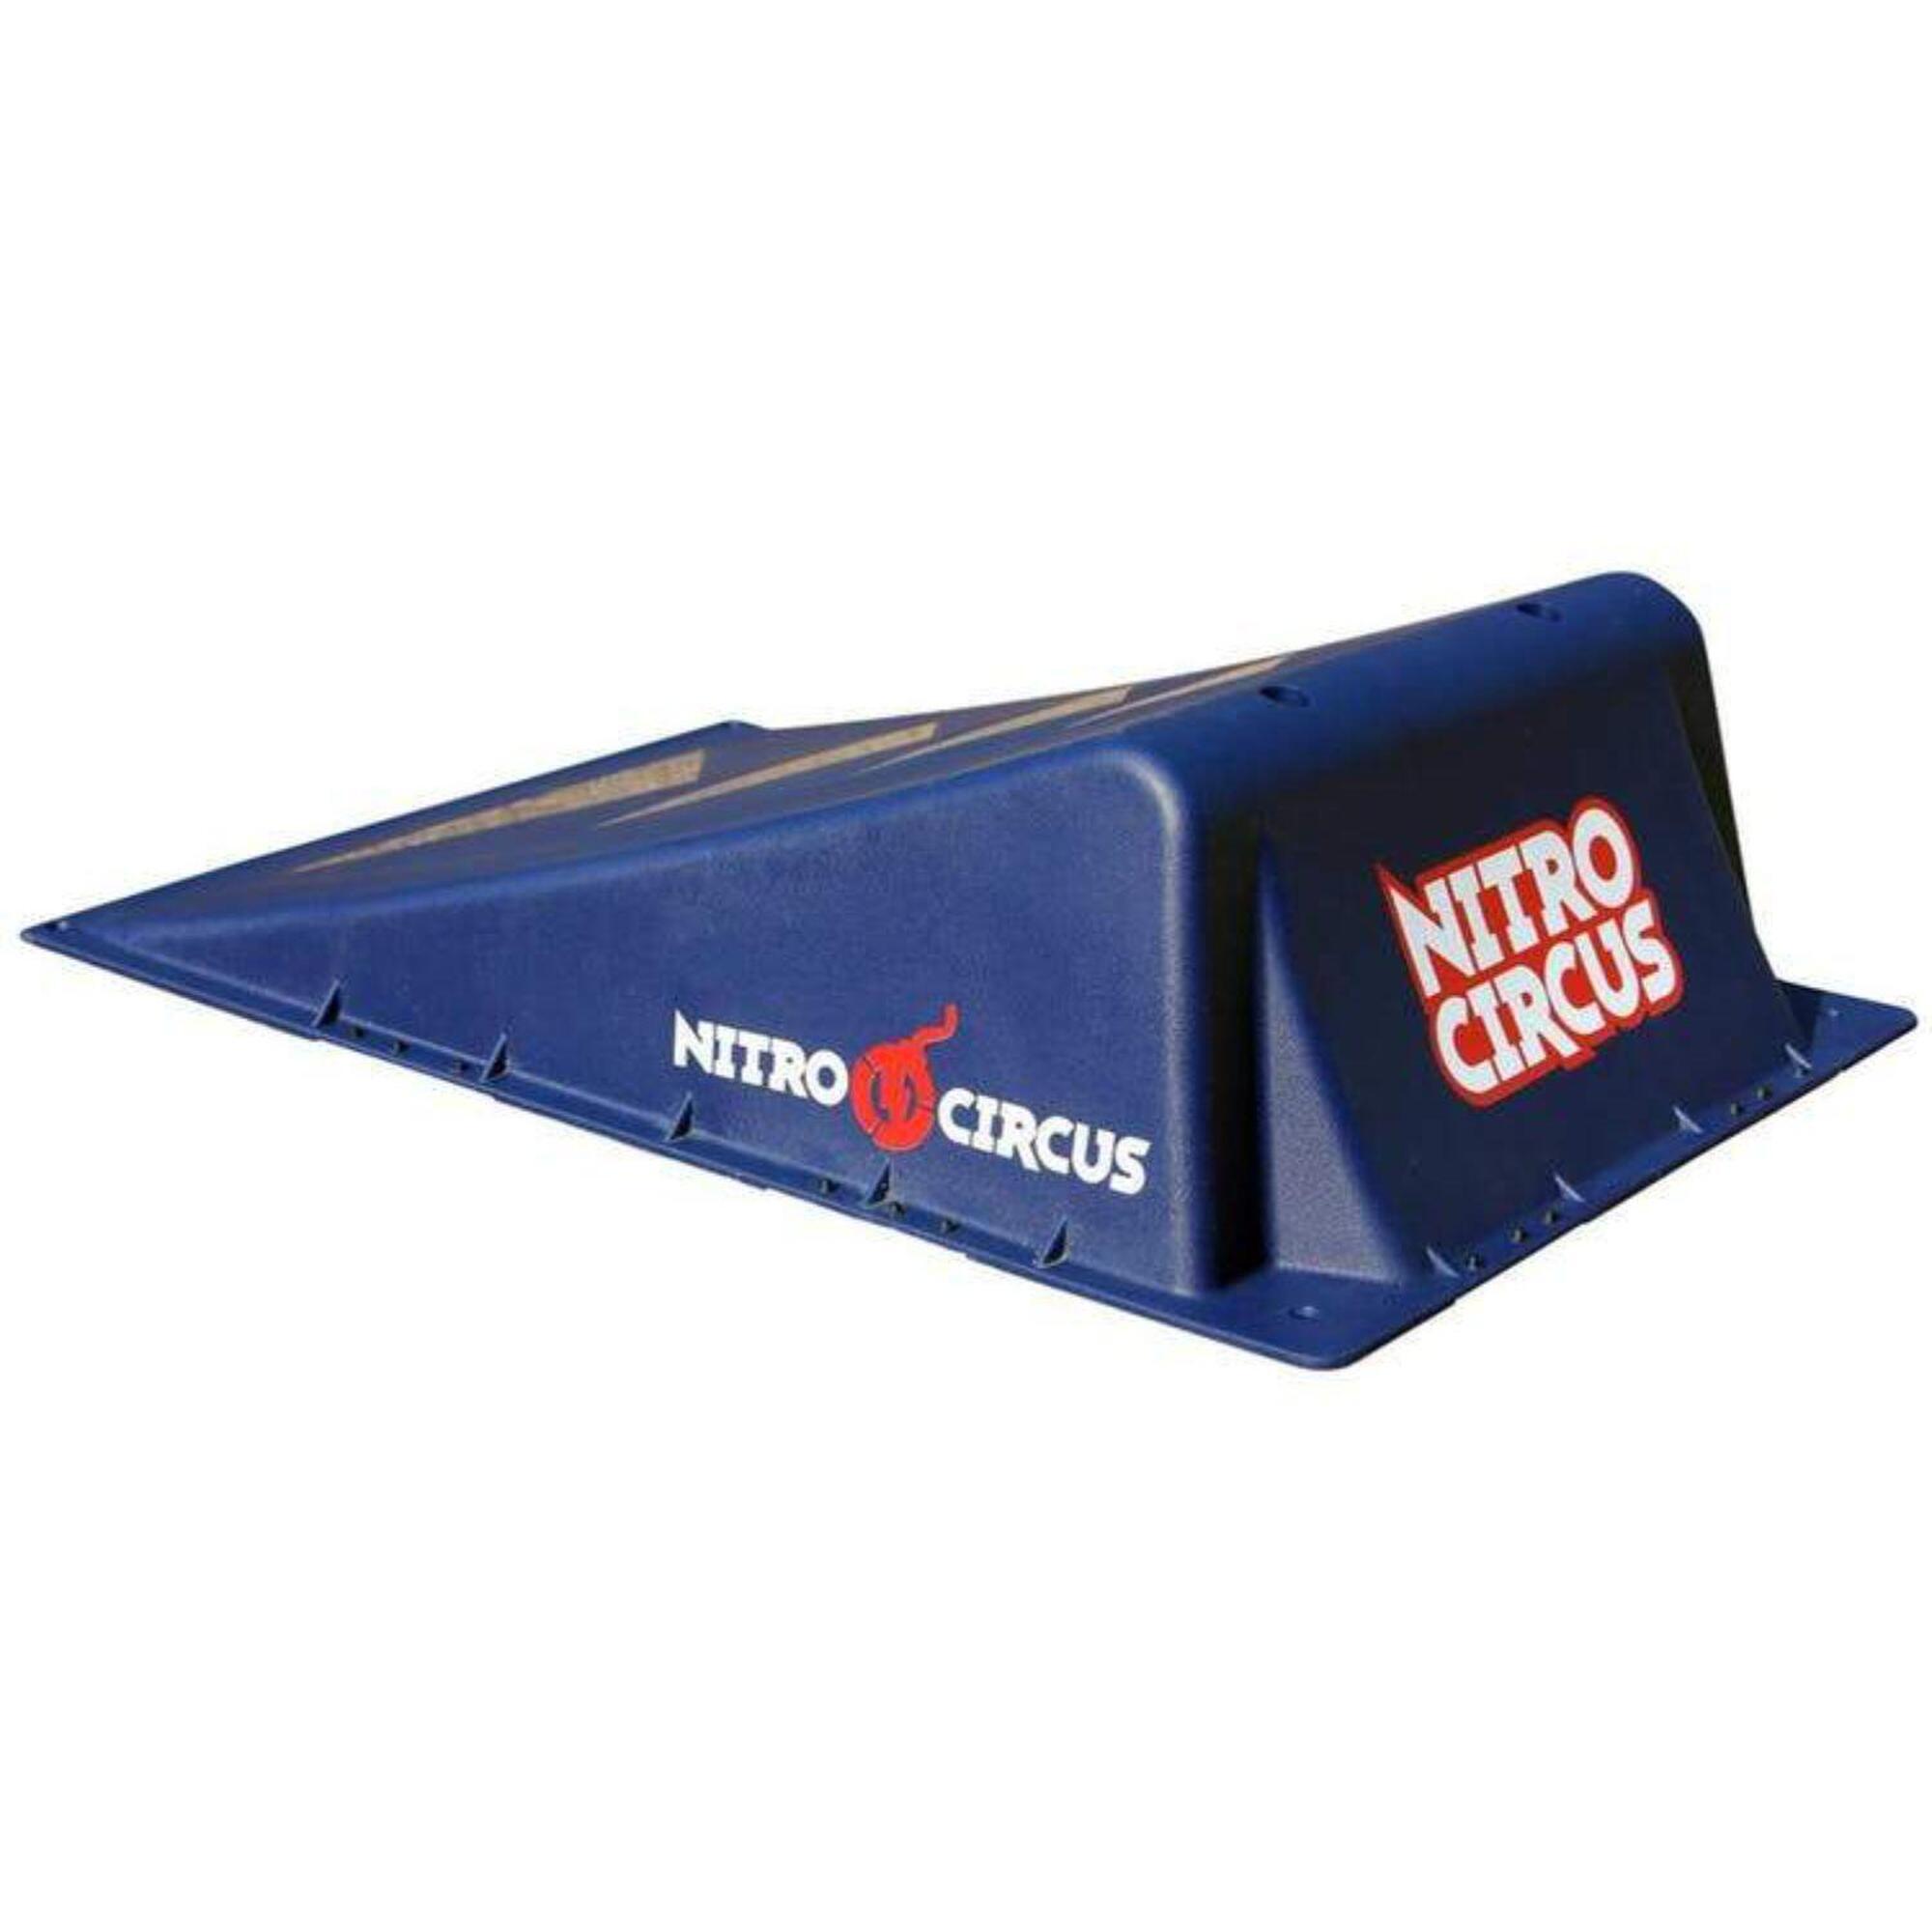 NITRO CIRCUS Nitro Circus Mini Launch Ramp